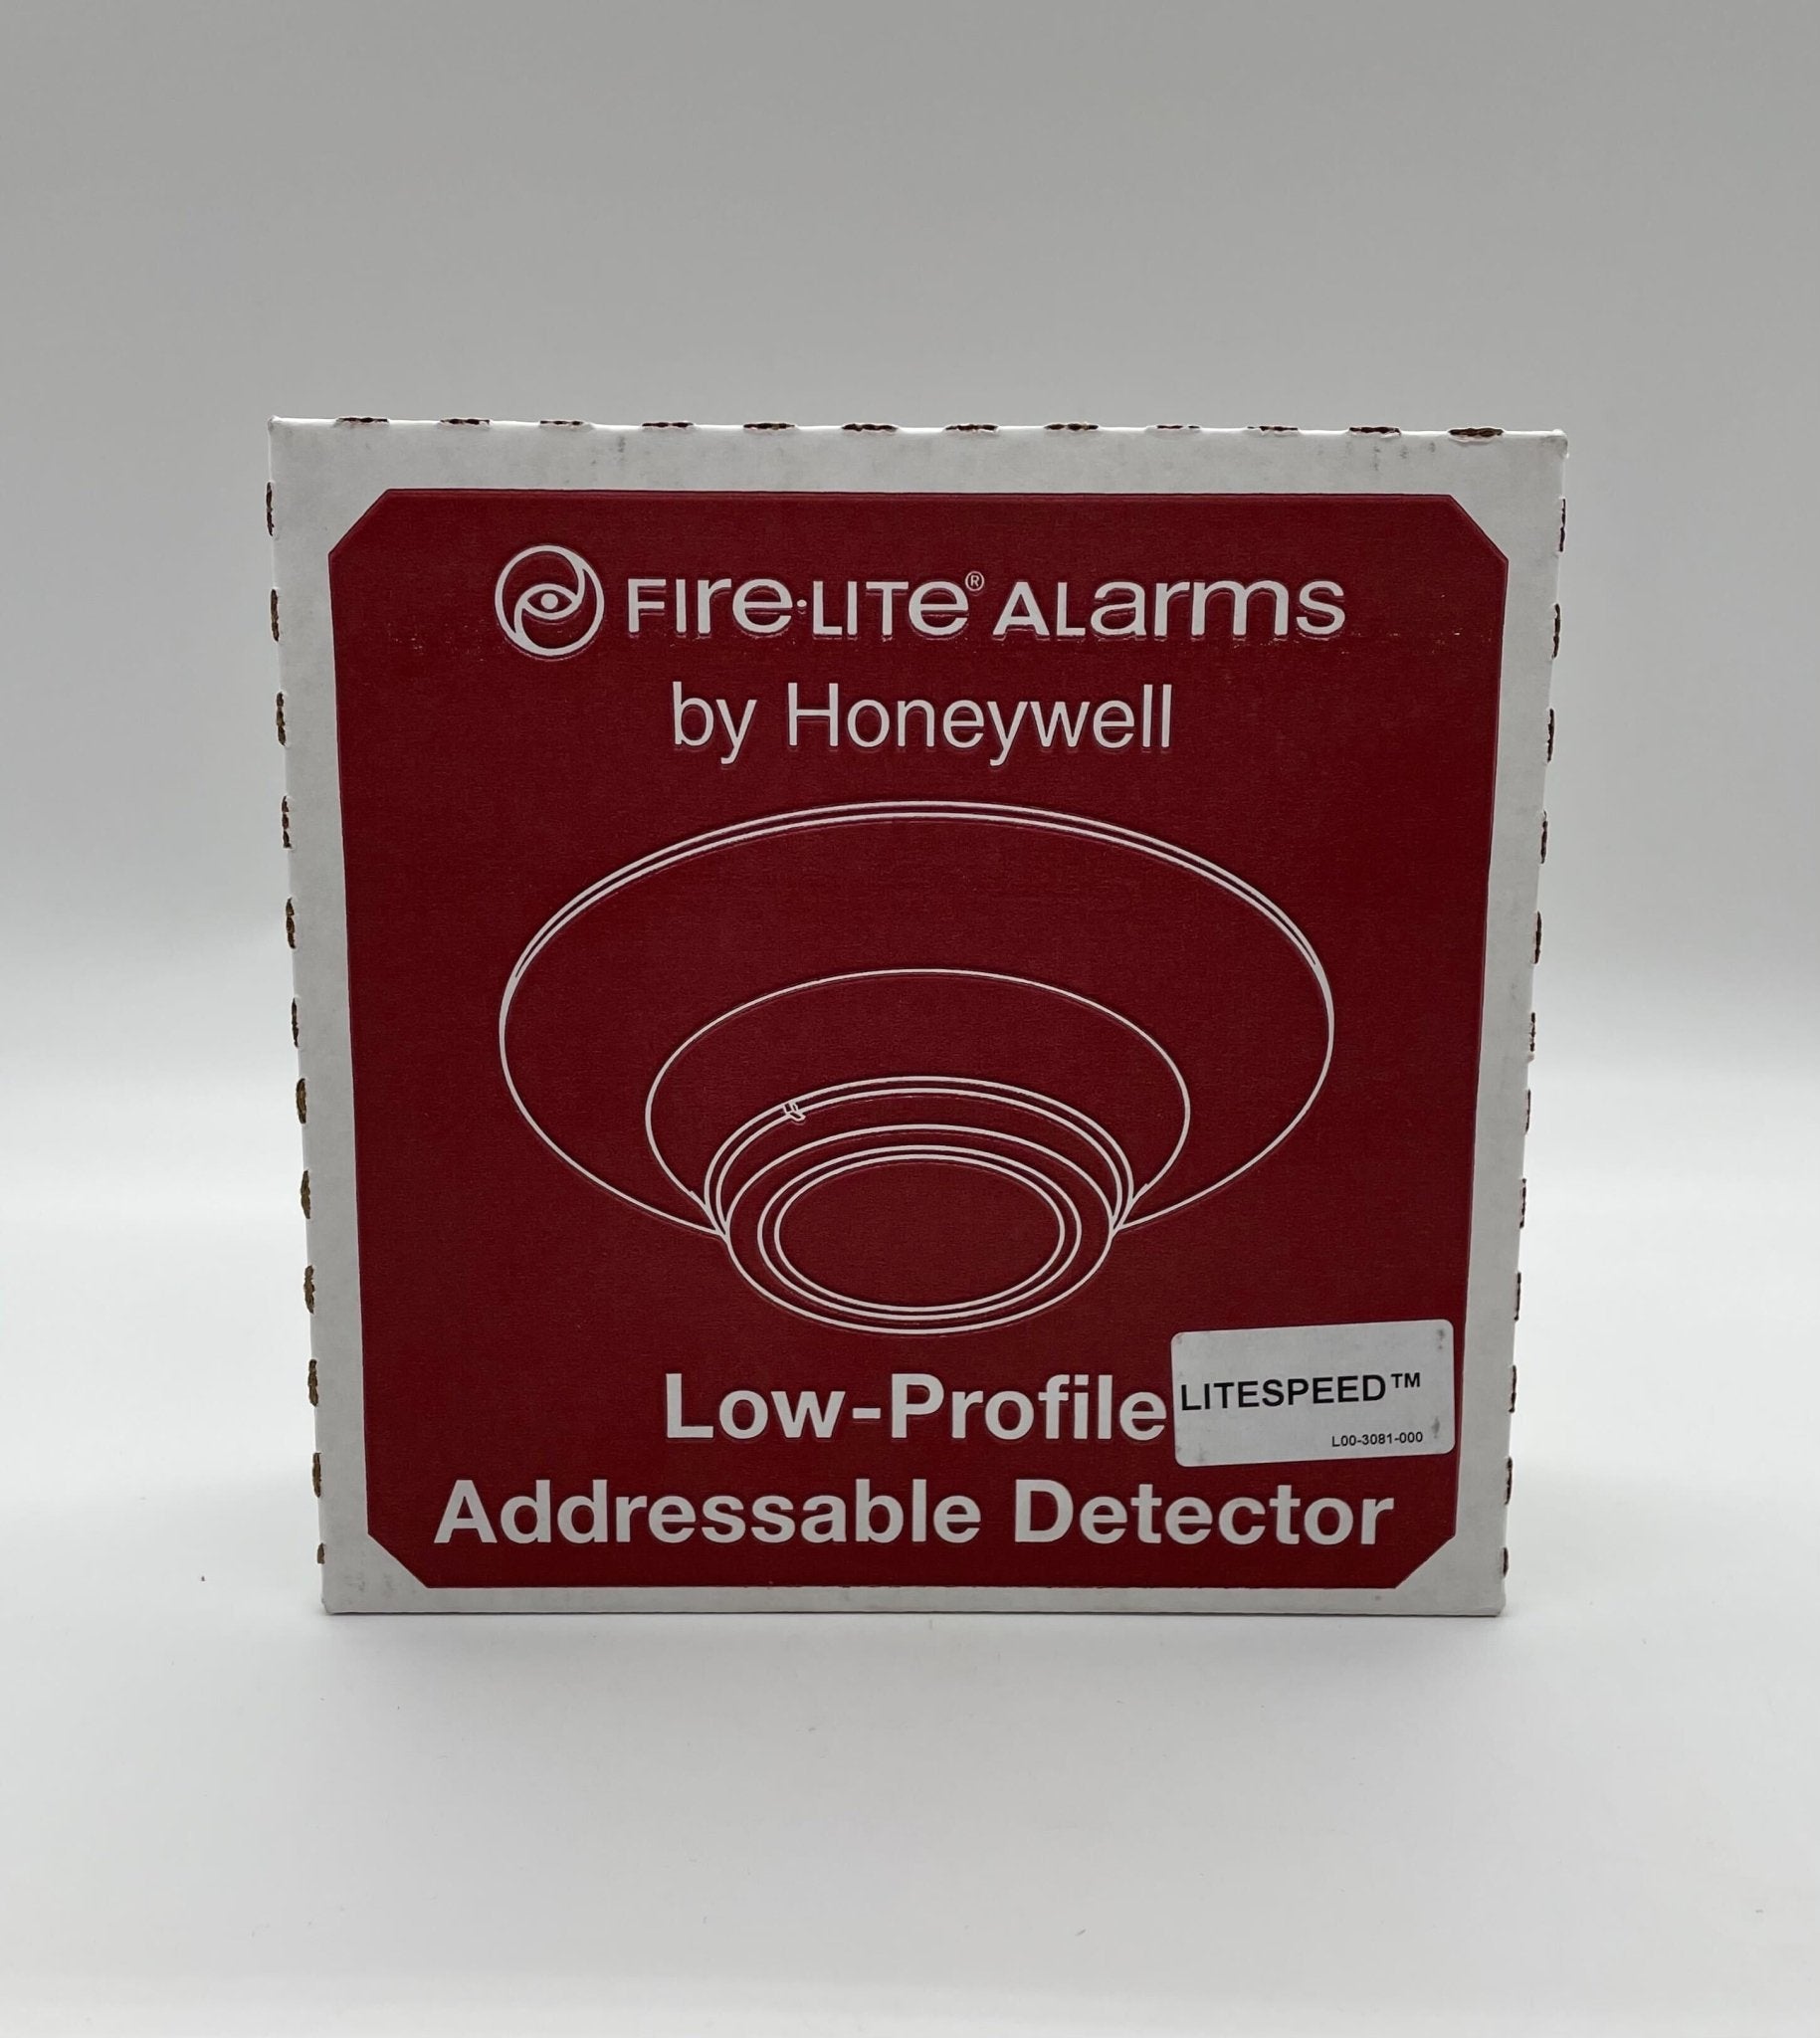 Firelite H365R - The Fire Alarm Supplier